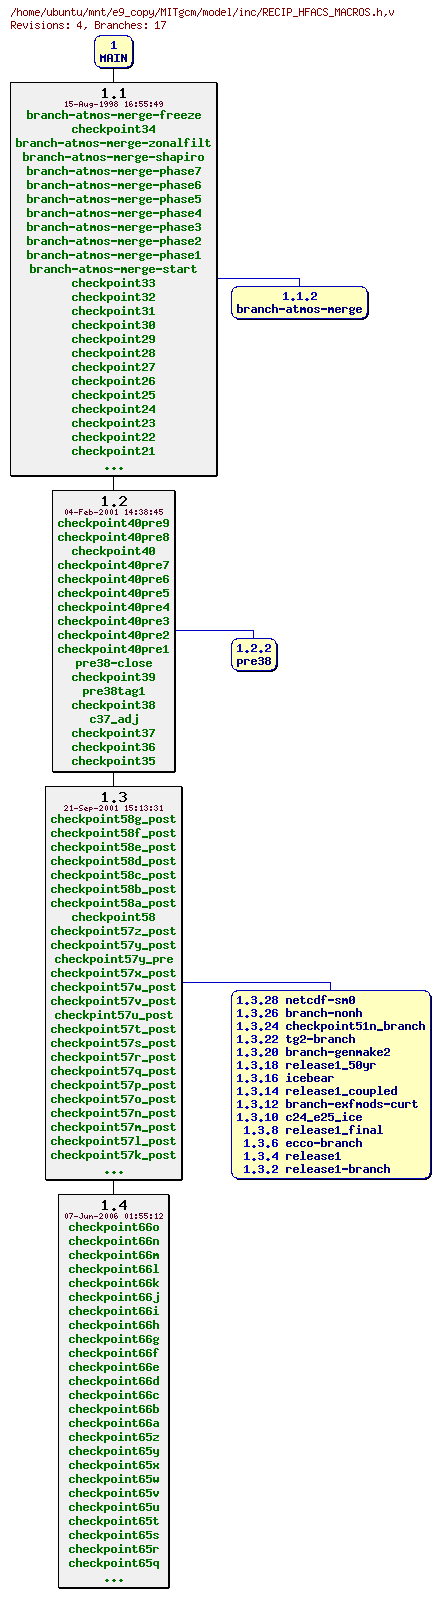 Revisions of MITgcm/model/inc/RECIP_HFACS_MACROS.h